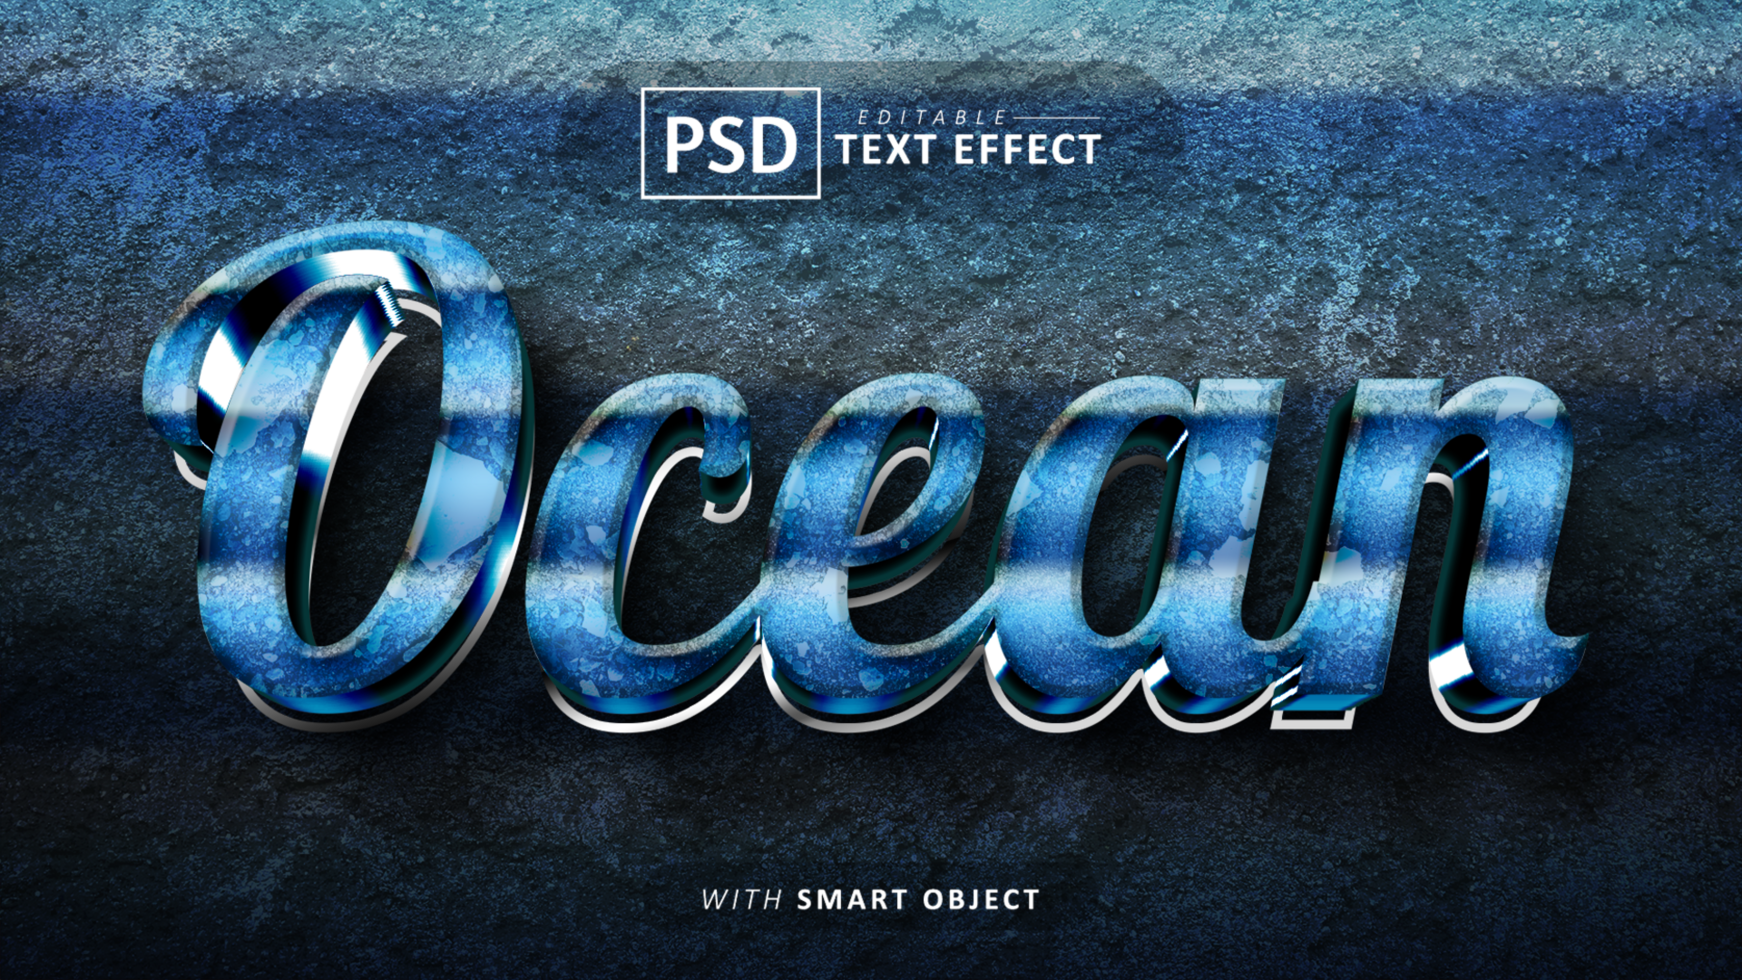 Ocean 3d text effect editable psd